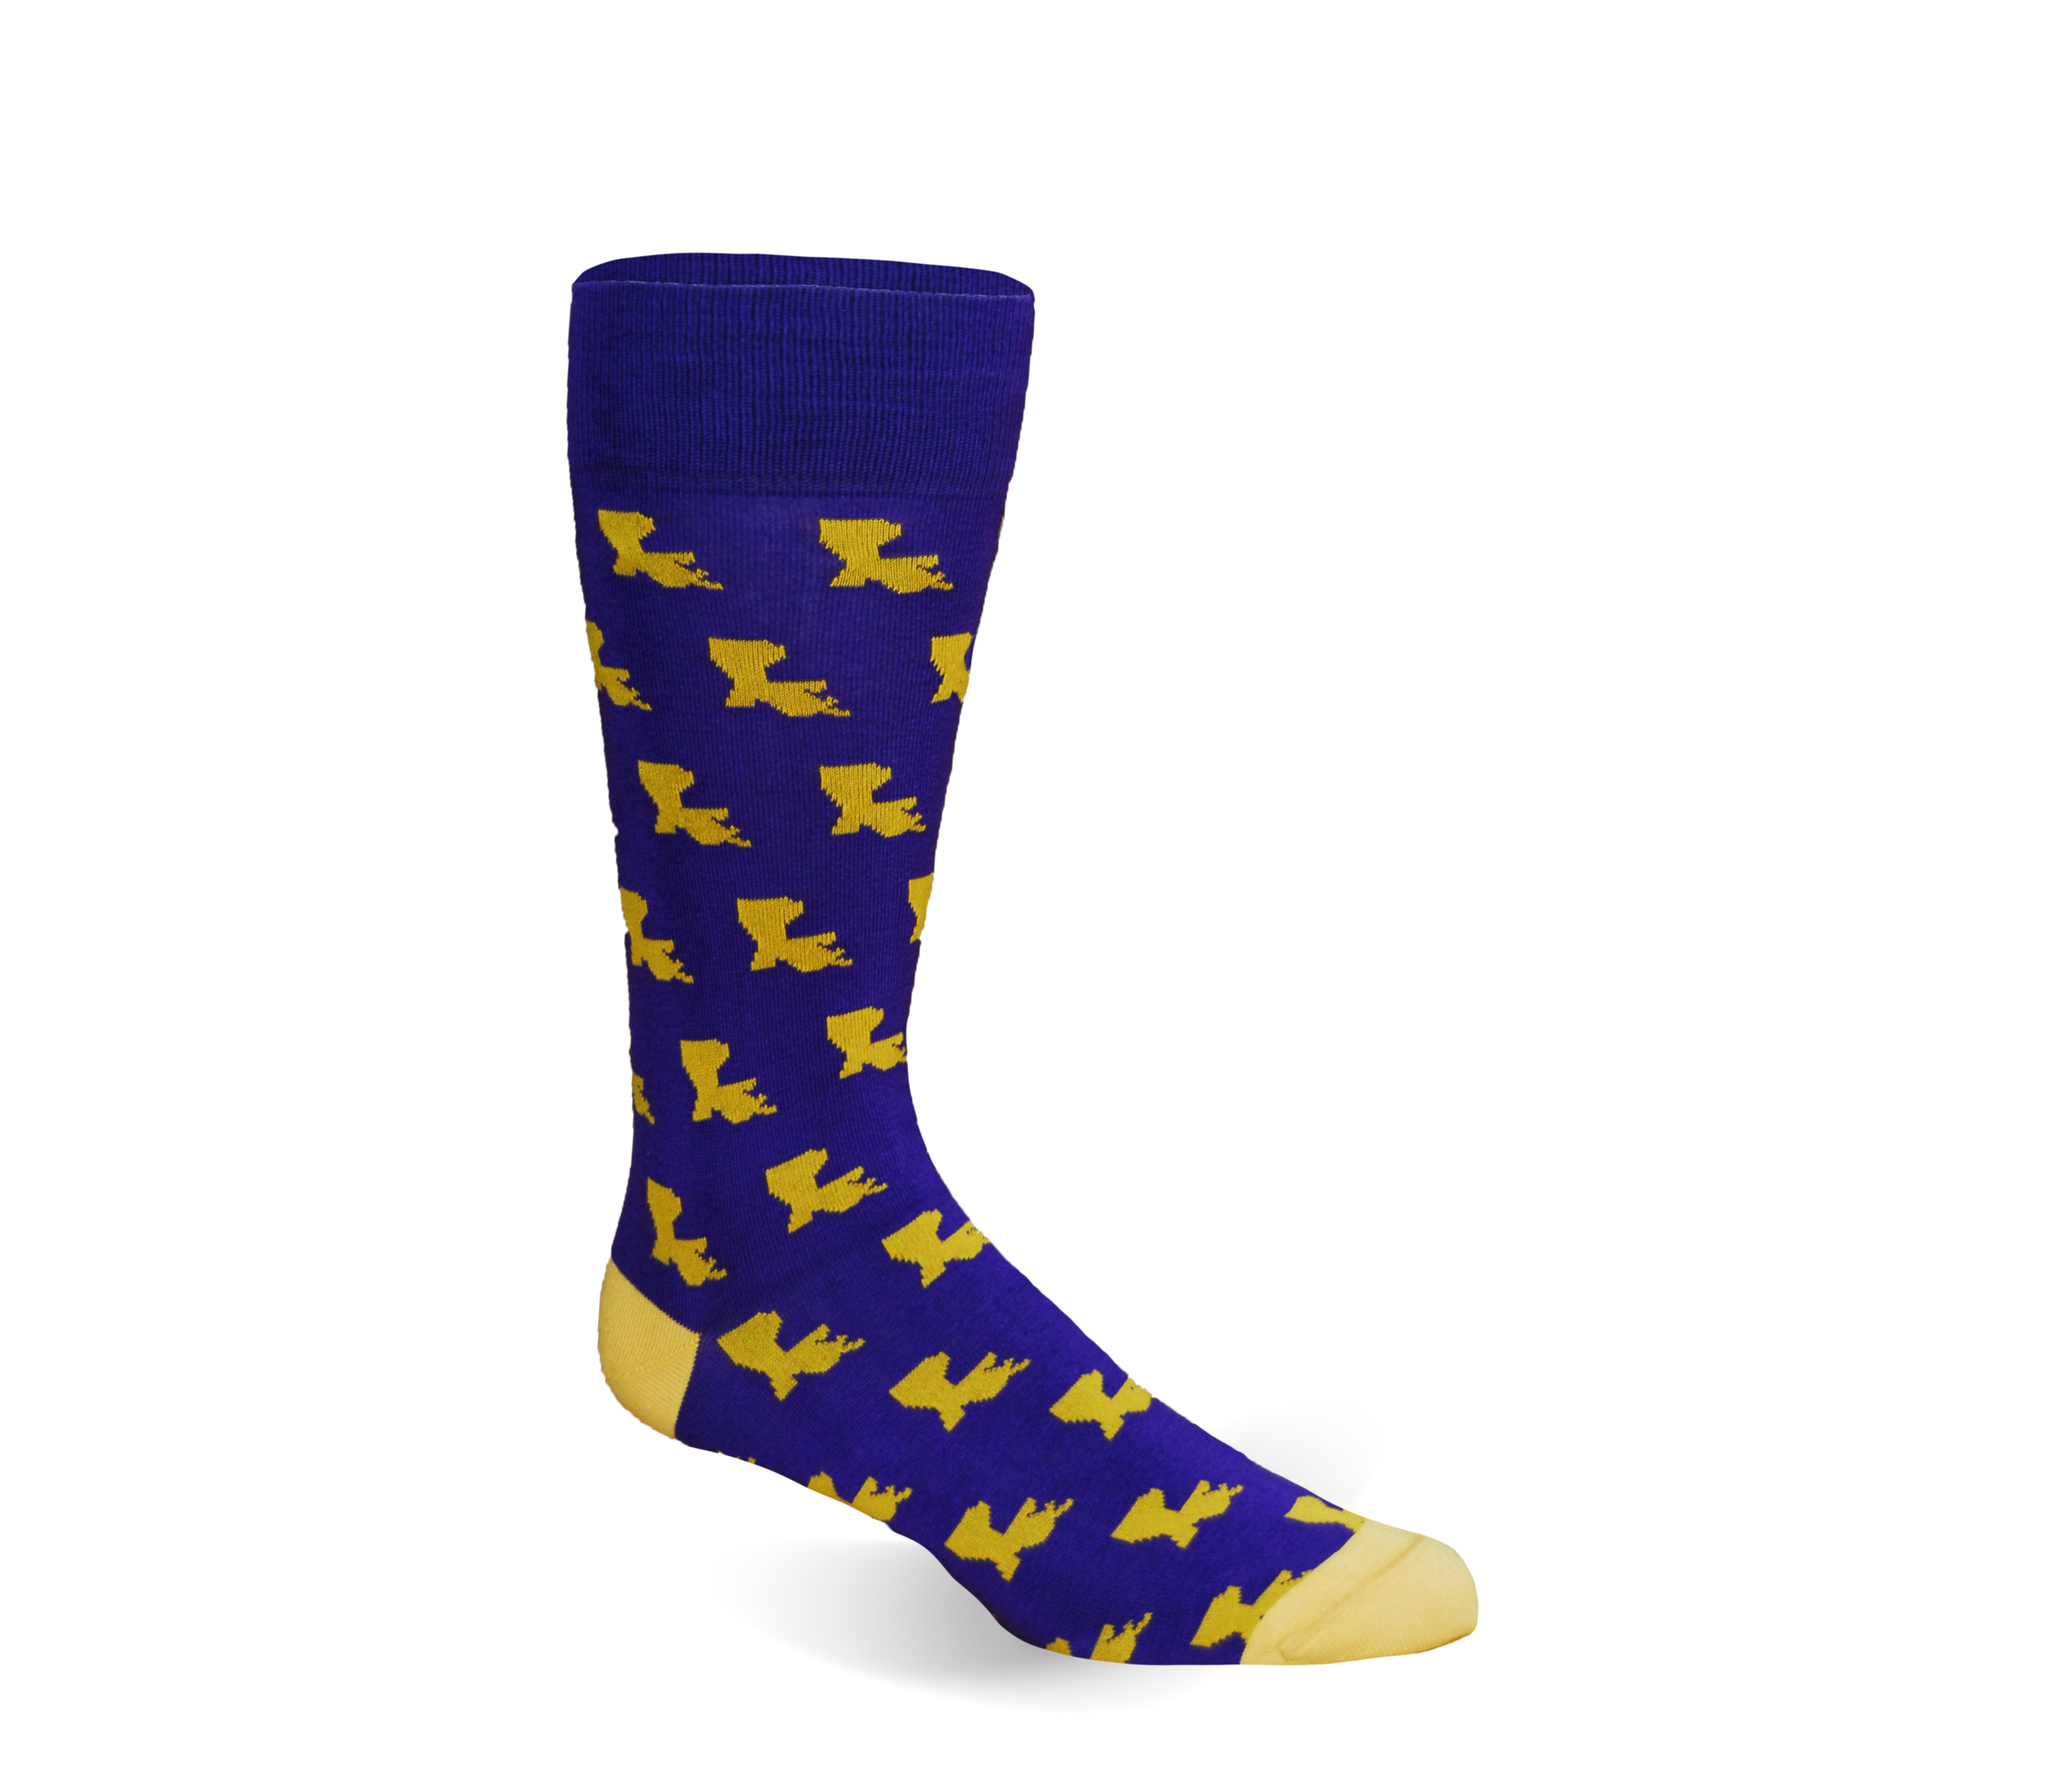 The Boot LSU Socks